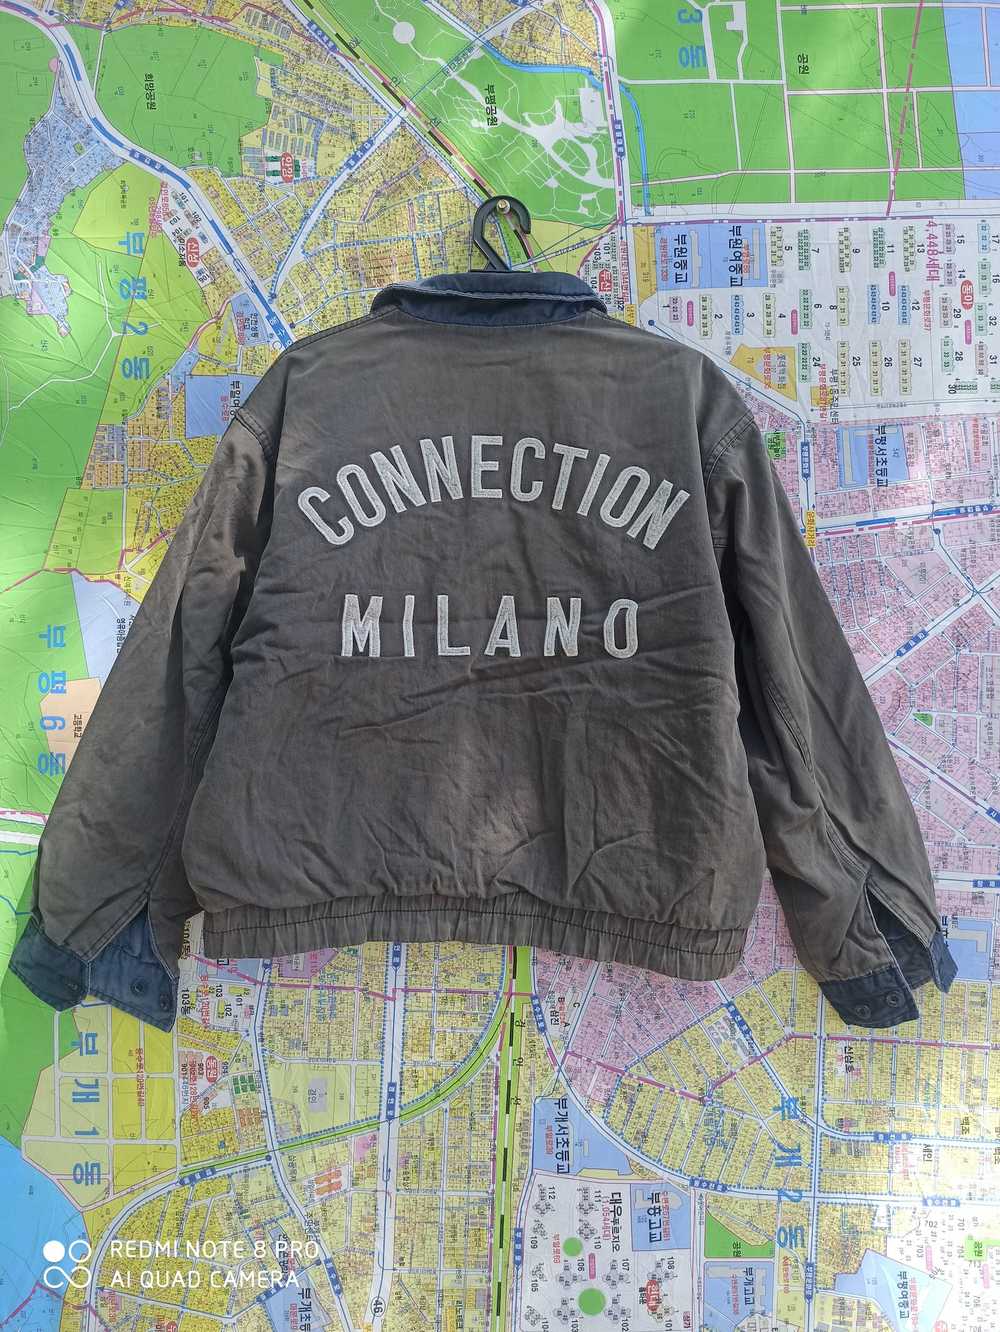 Milano Uomo Milano Connection Reversible Jacket - image 2